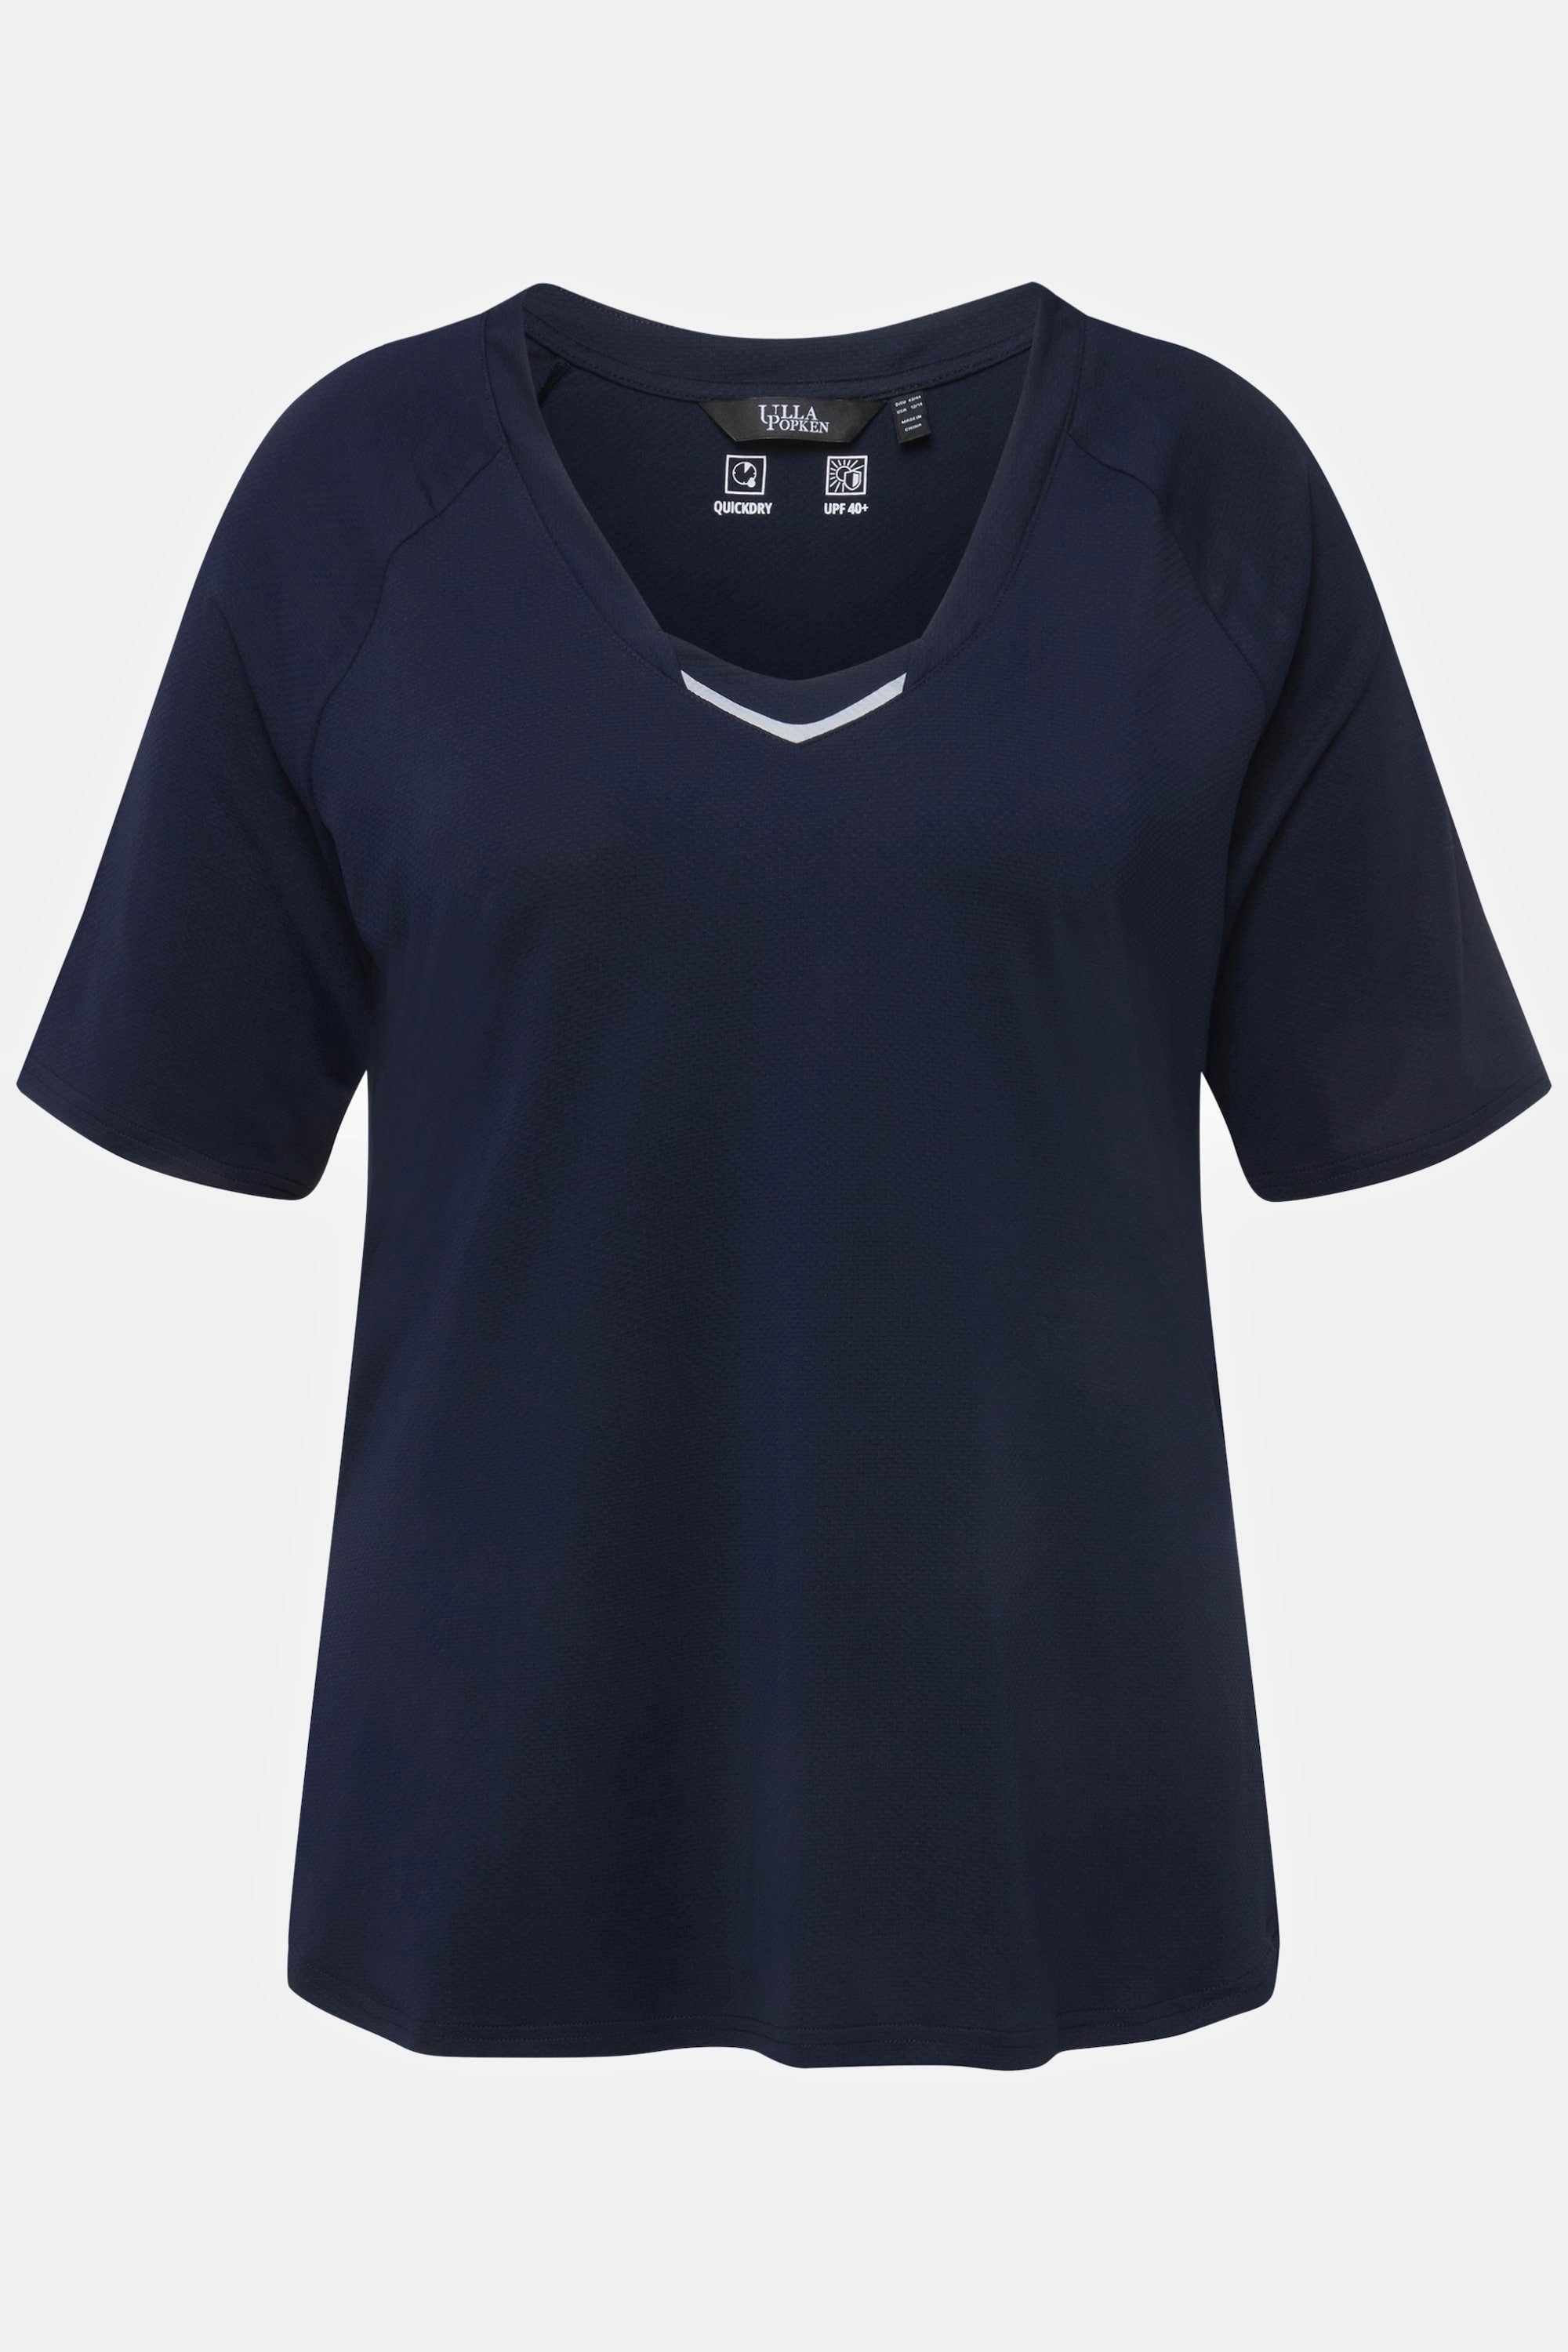 T-Shirt Ulla marine V-Ausschnitt Popken UV-Schutz Halbarm 40+ Rundhalsshirt